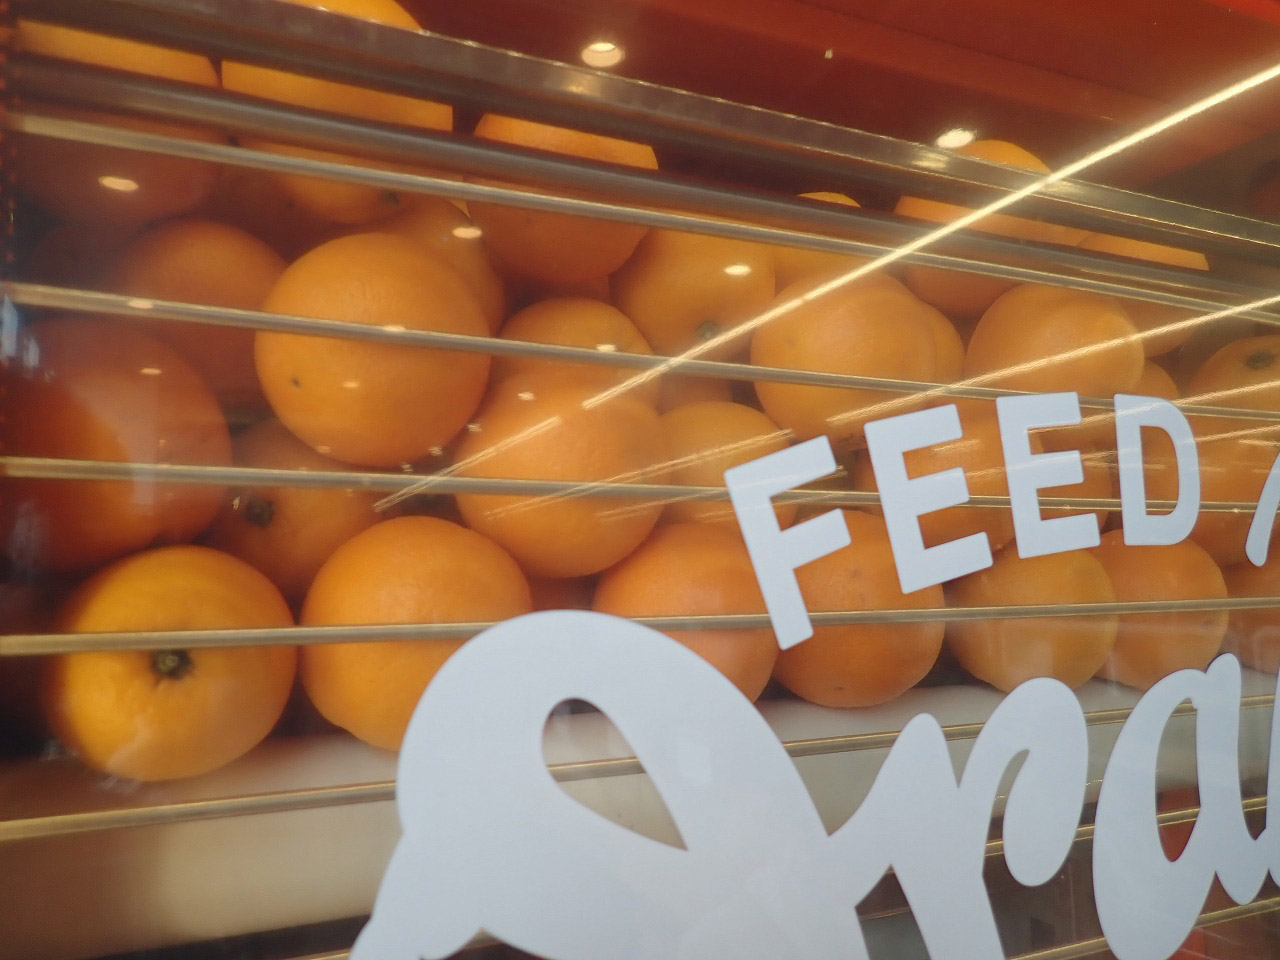 『QLuRi川越』に設置してあるオレンジジュースの自動販売機